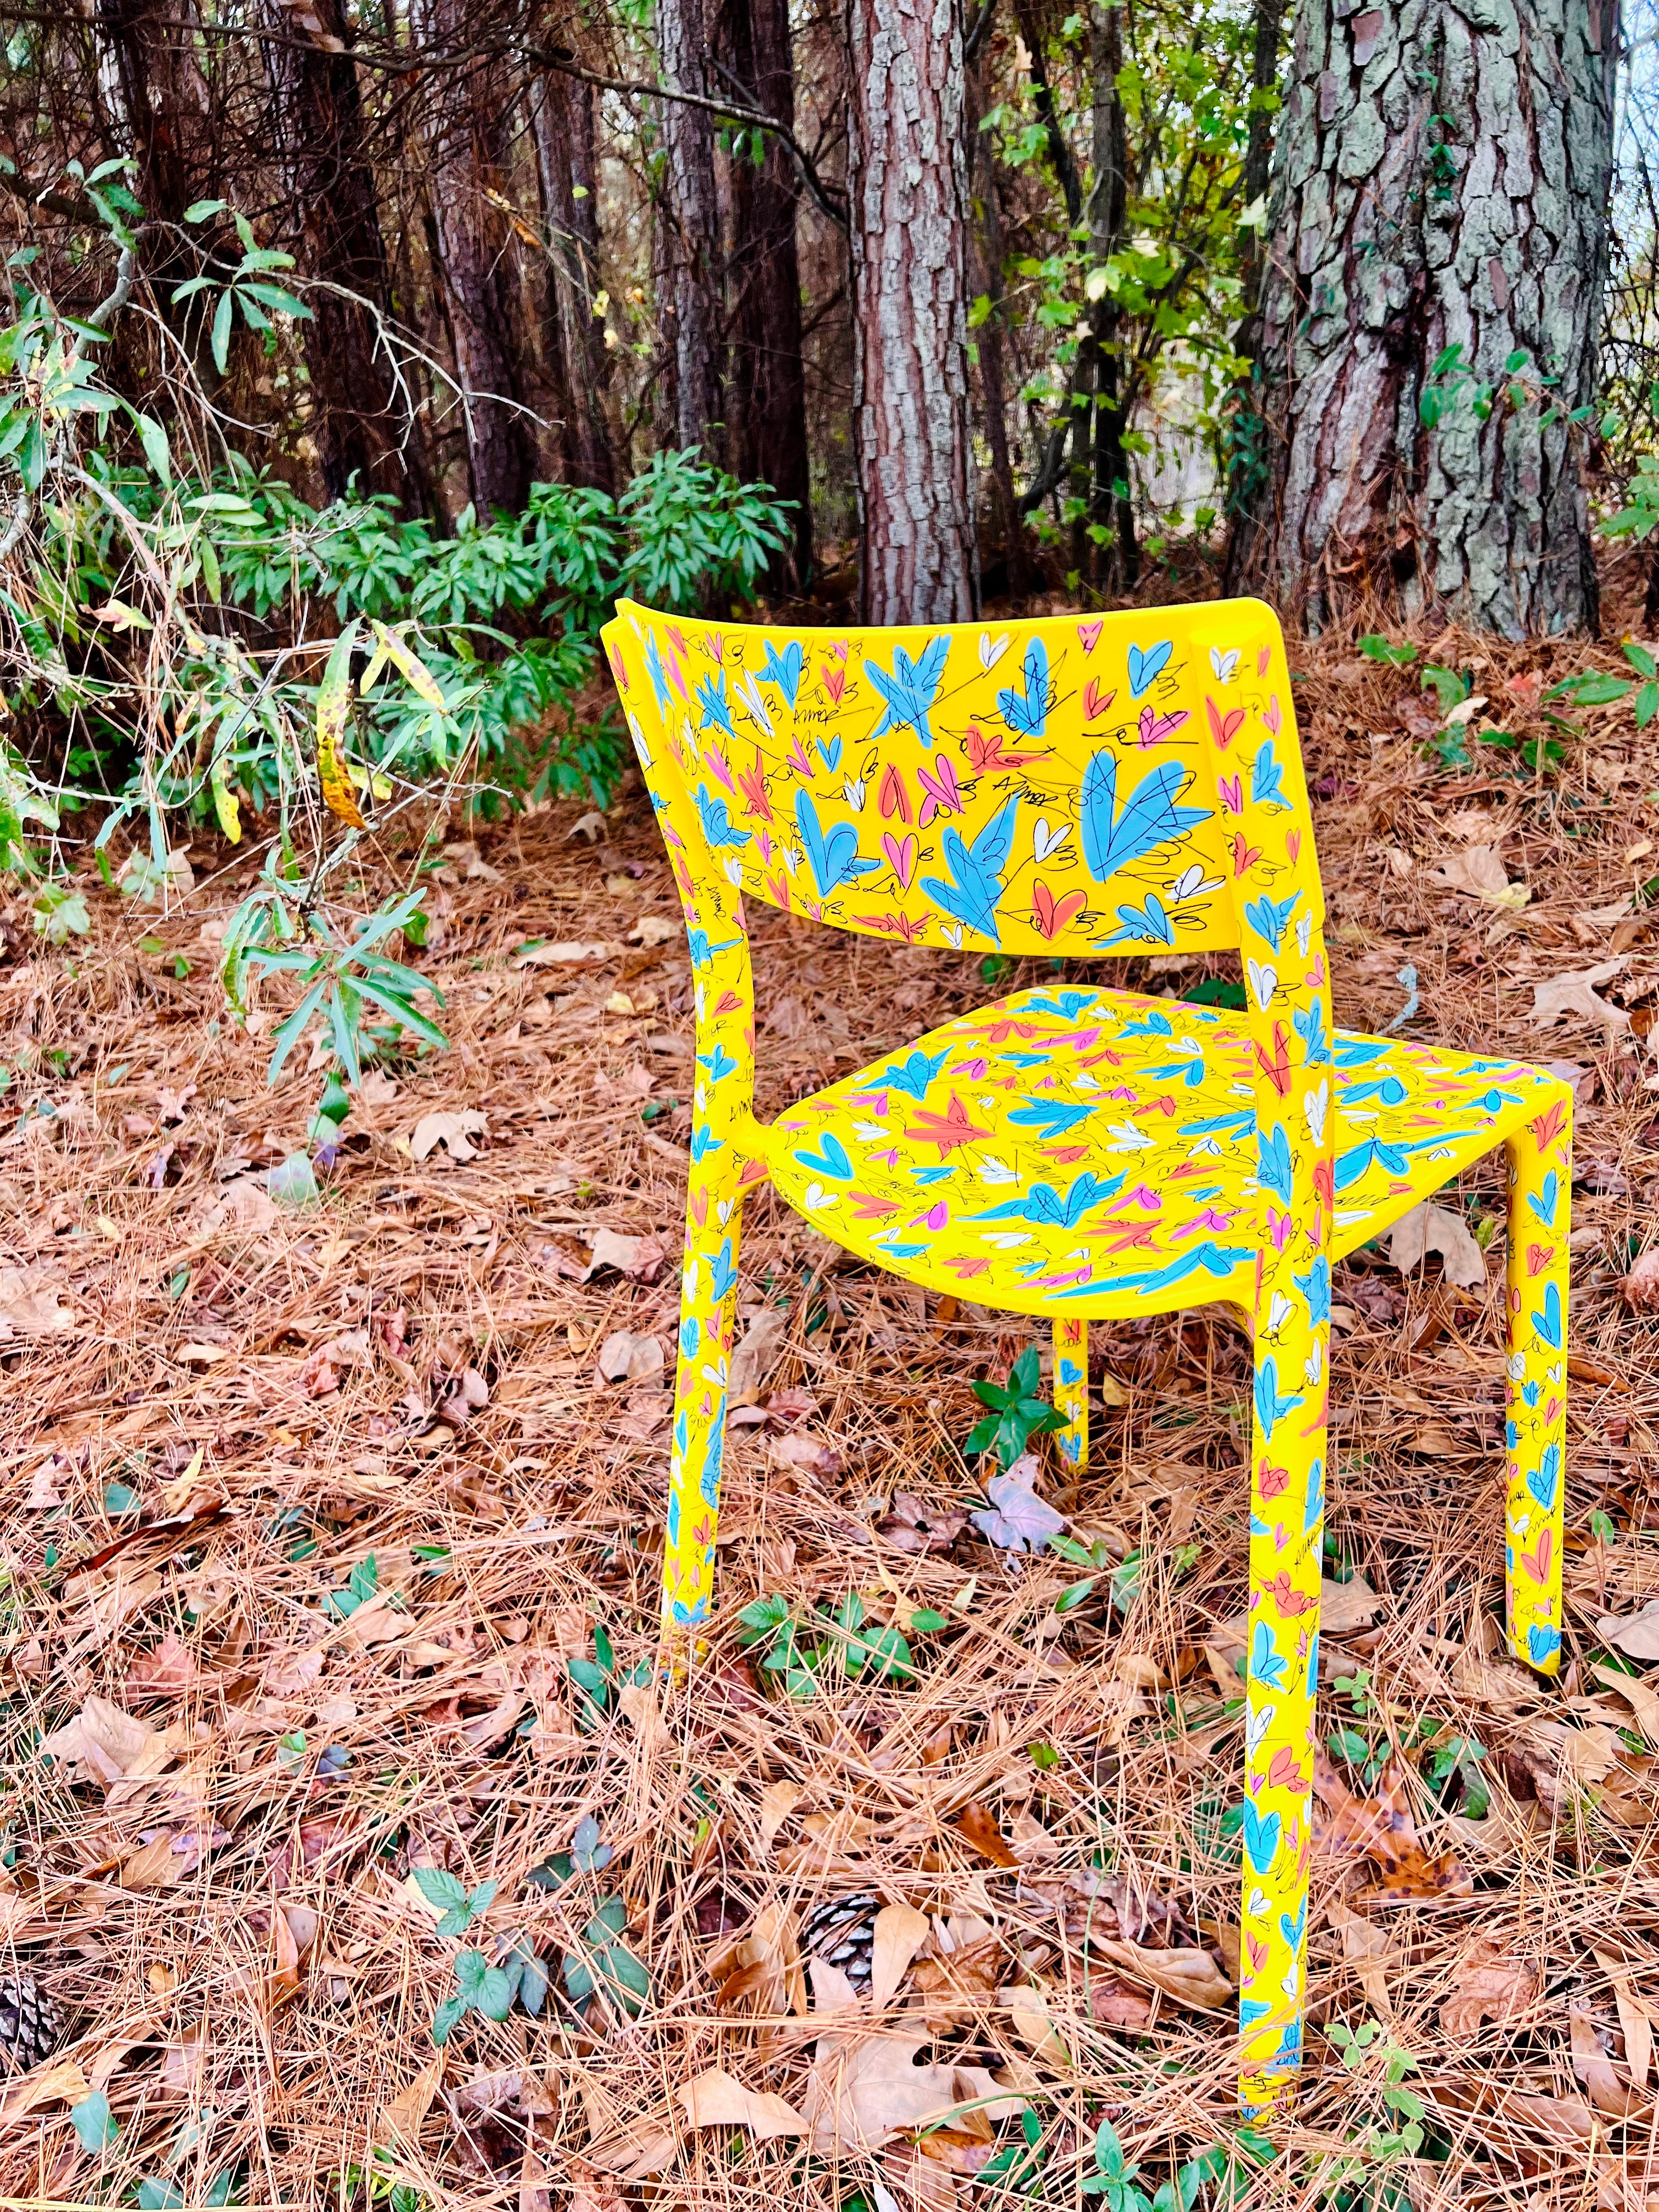 Janinge yellow “IKEA” chair TM art pattern.